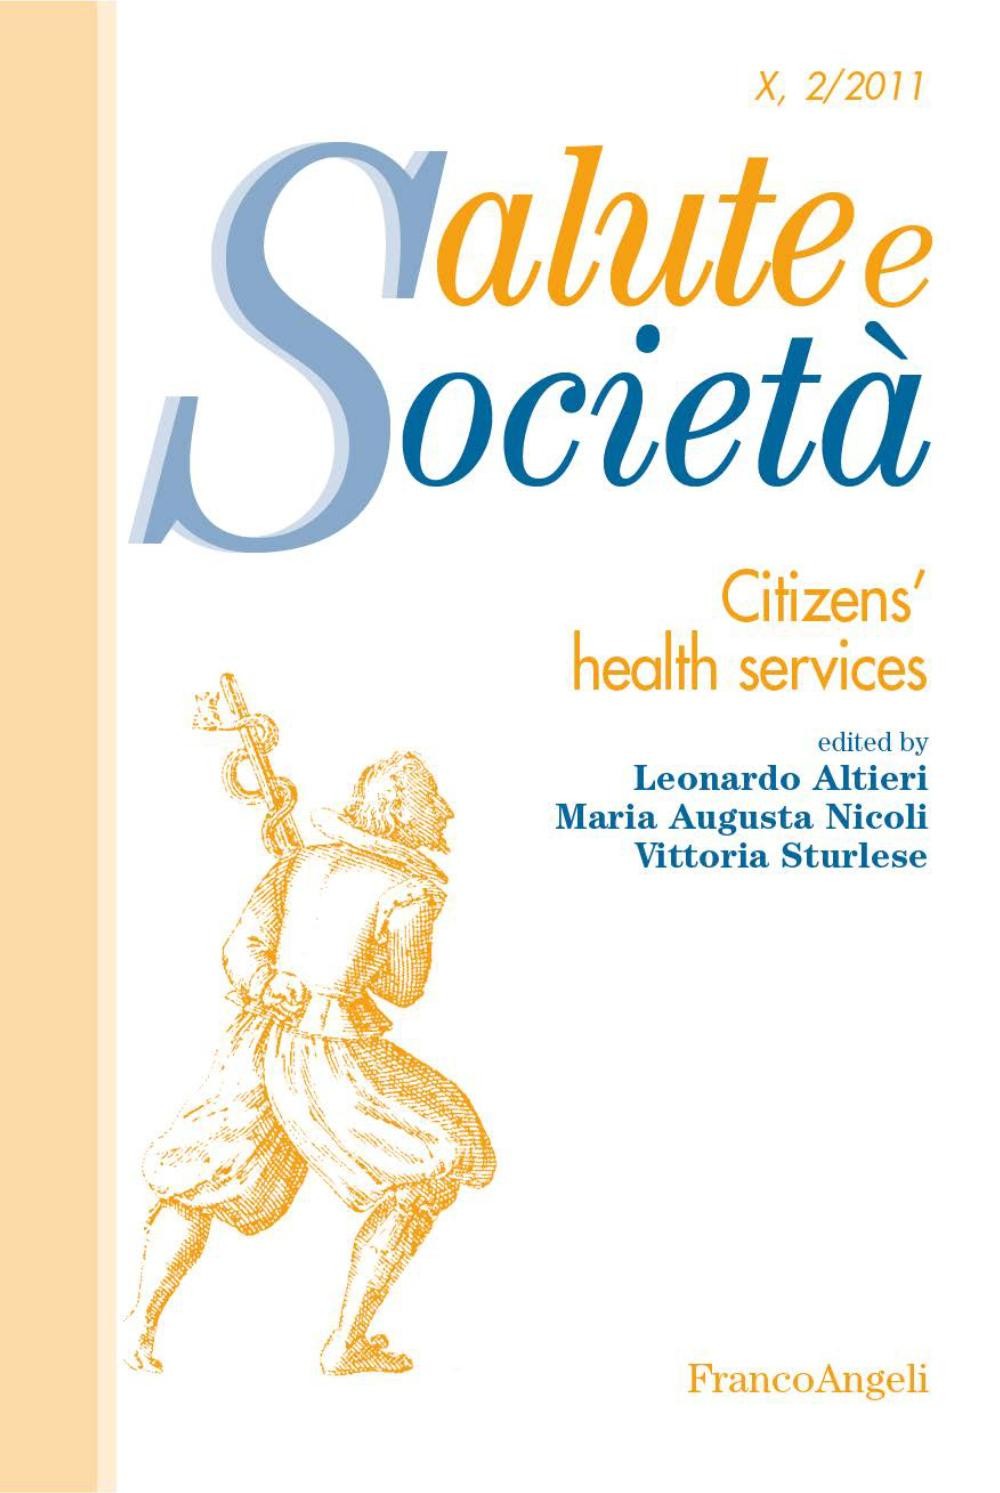 Citizens' health services - Librerie.coop